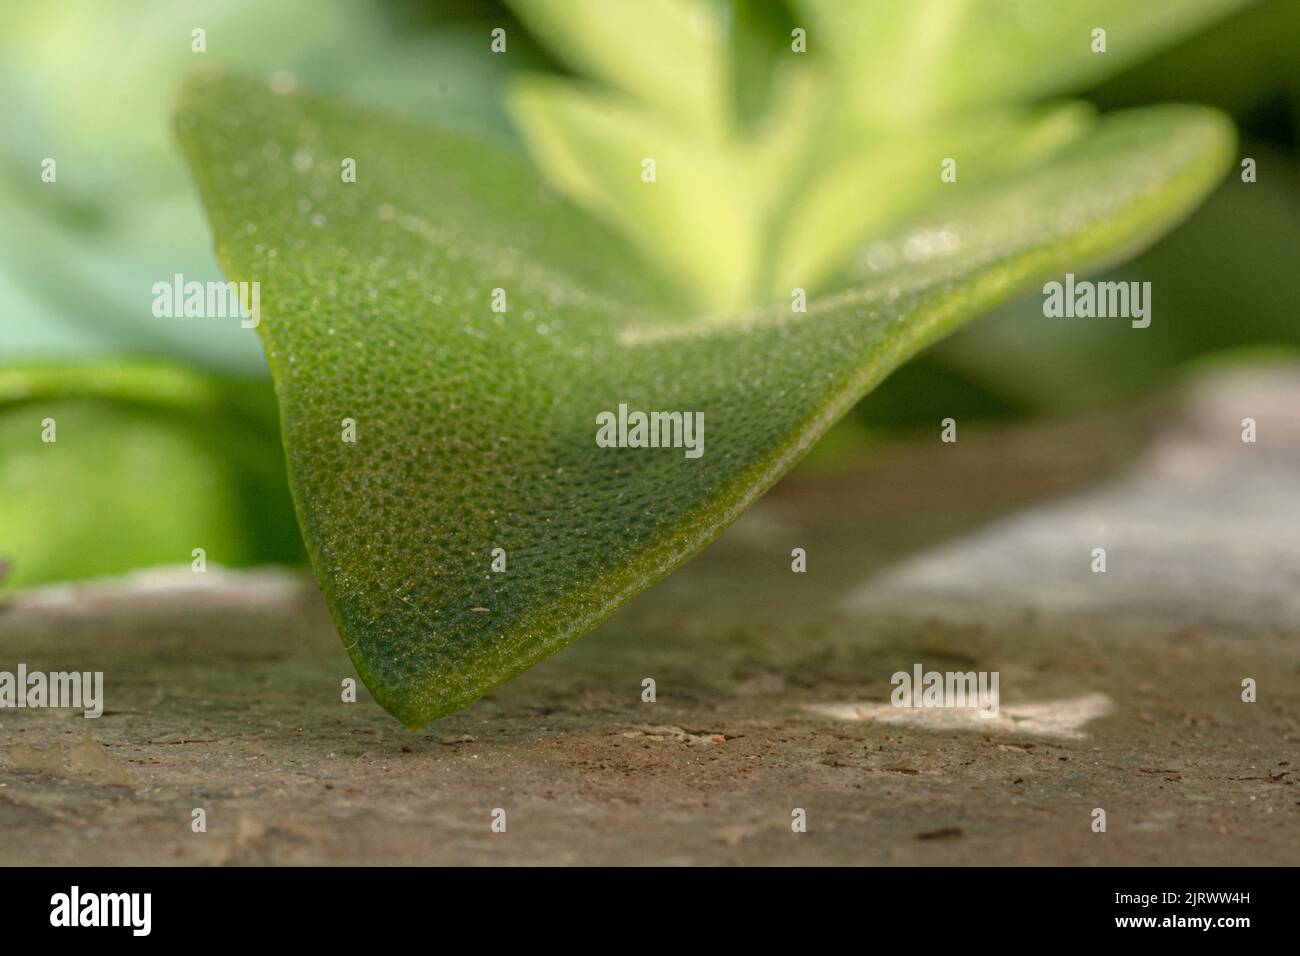 close-up of Houseplant Crassula ovata (jade plant, lucky plant, money plant or money tree) succulent plant Stock Photo